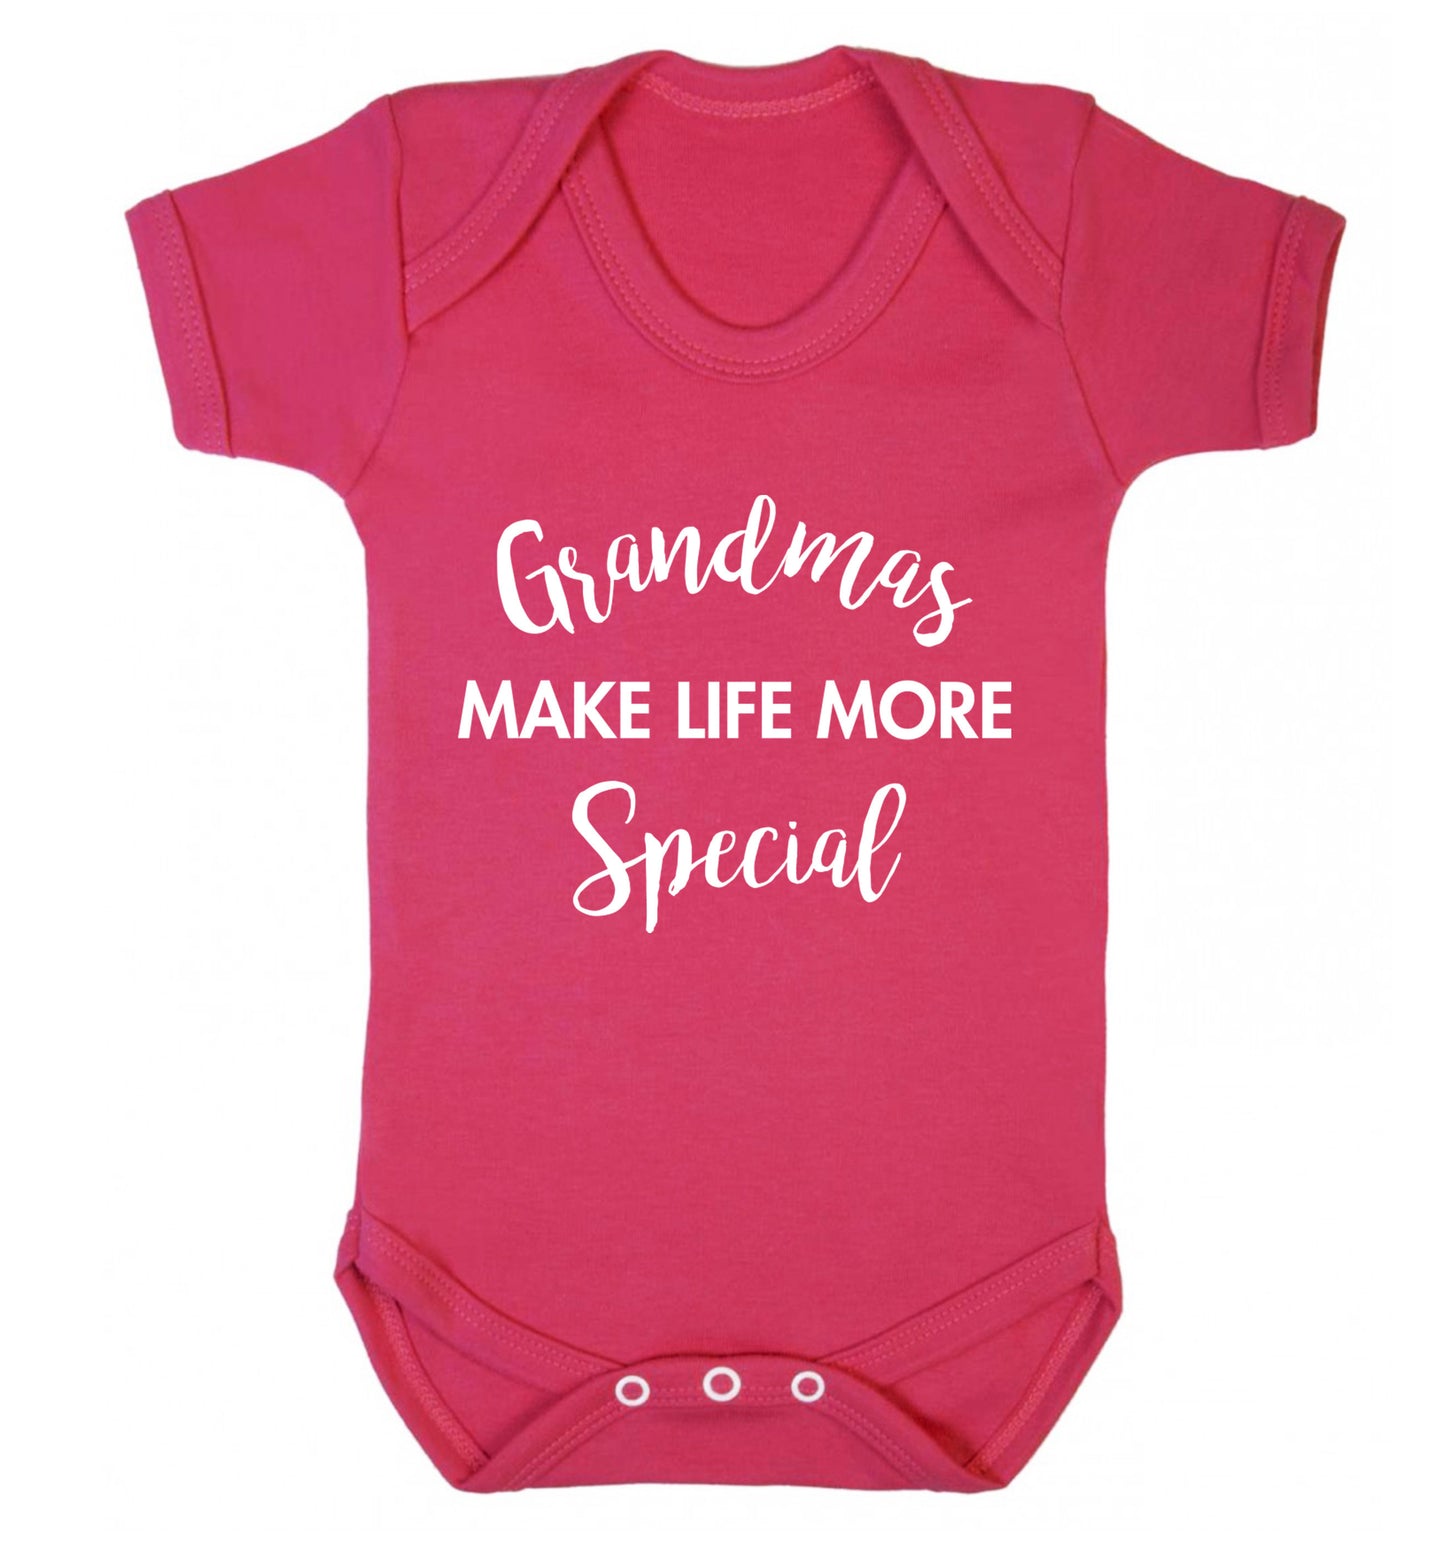 Grandmas make life more special Baby Vest dark pink 18-24 months